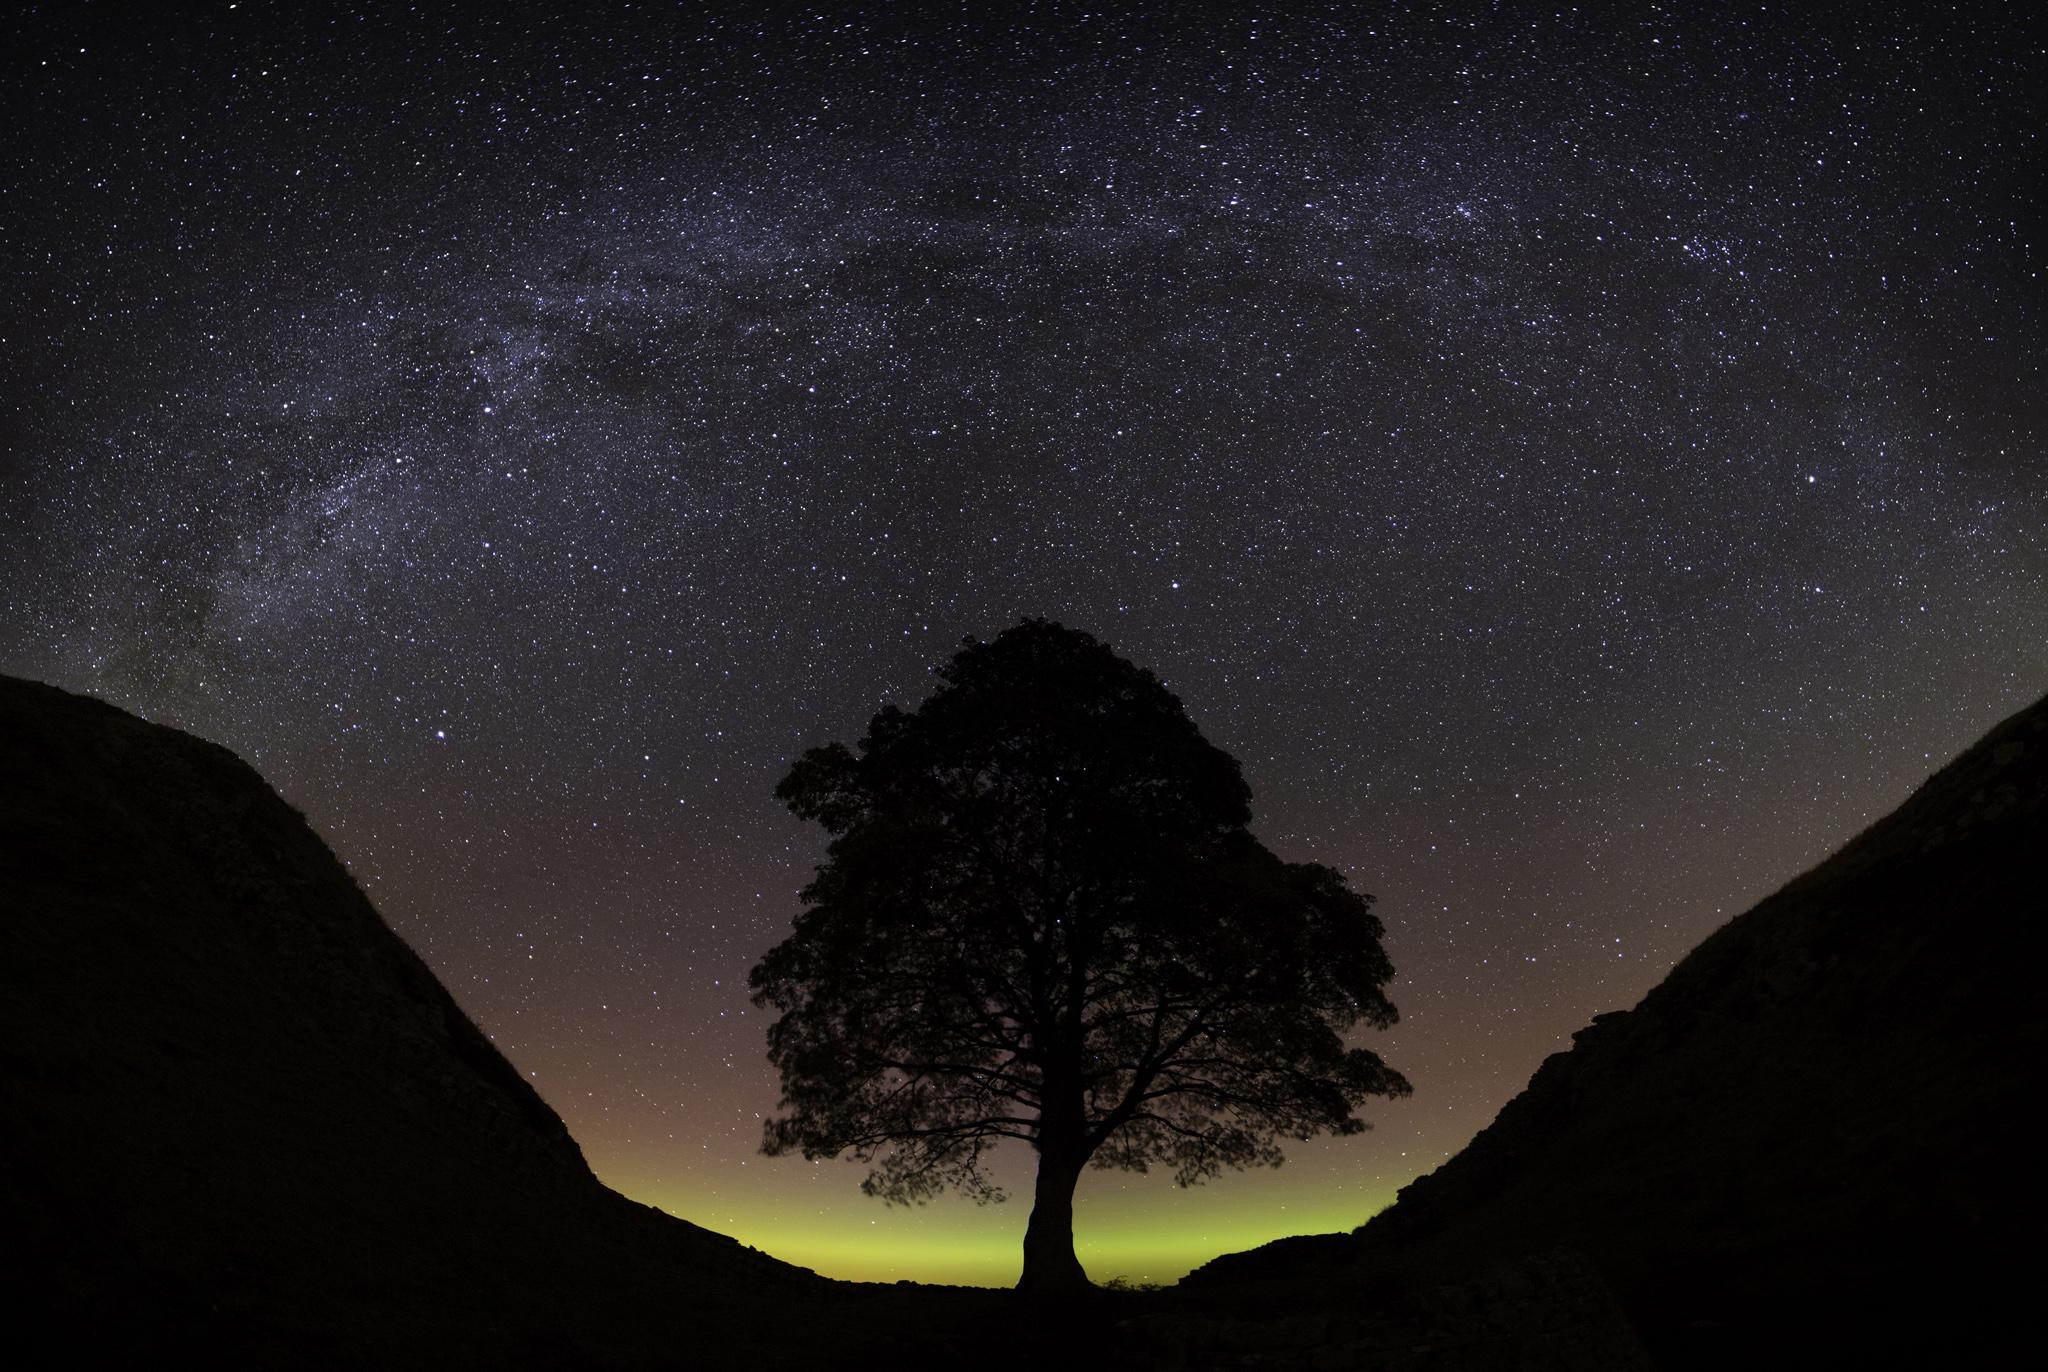 The Milky Way over Sycamore Gap, Northumberland International Dark Sky Park